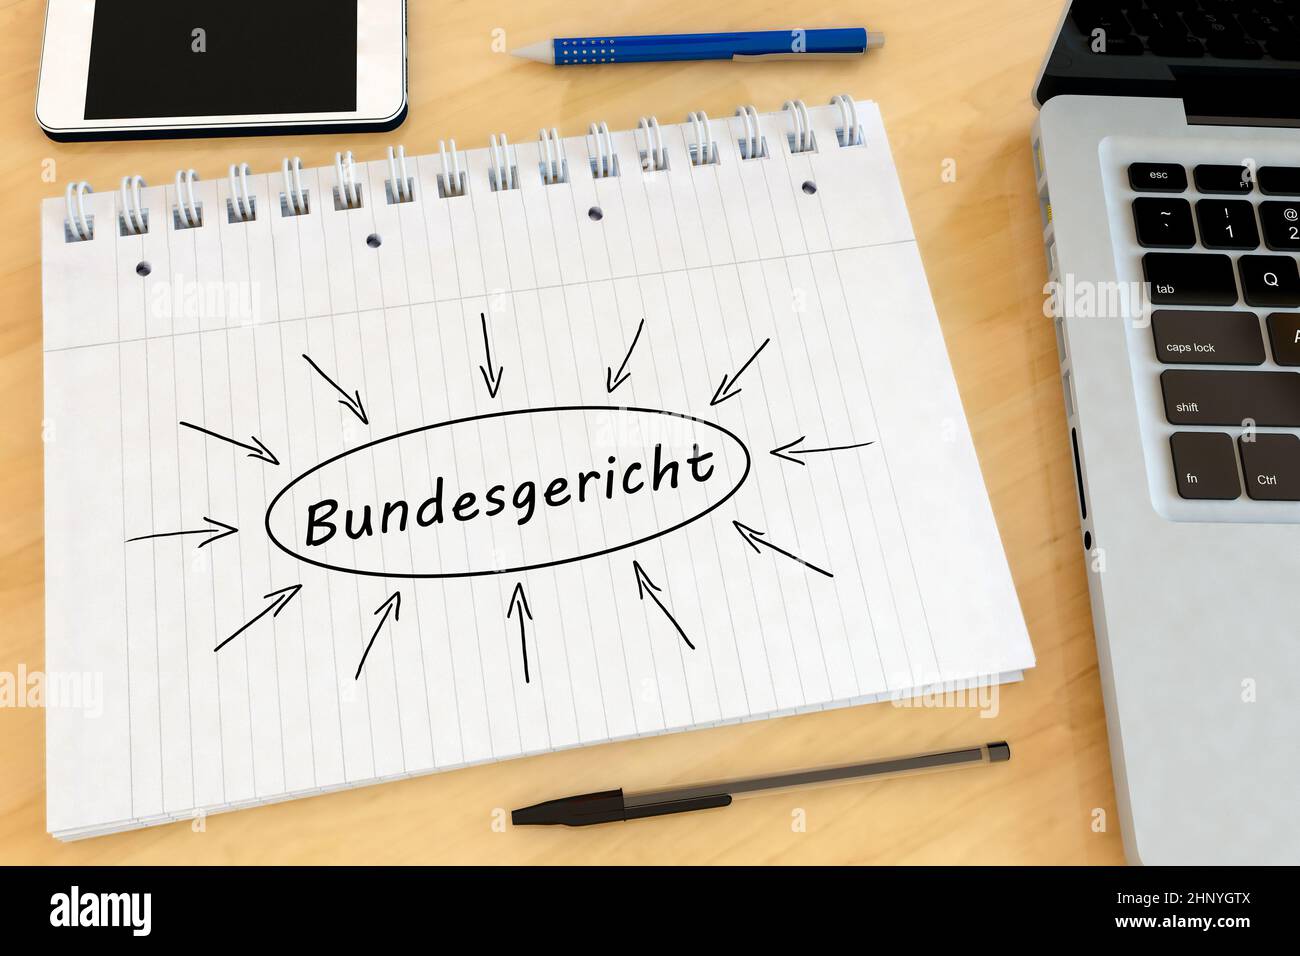 Bundesgericht - german word for Supreme Court - handwritten text in a notebook on a desk - 3d render illustration. Stock Photo